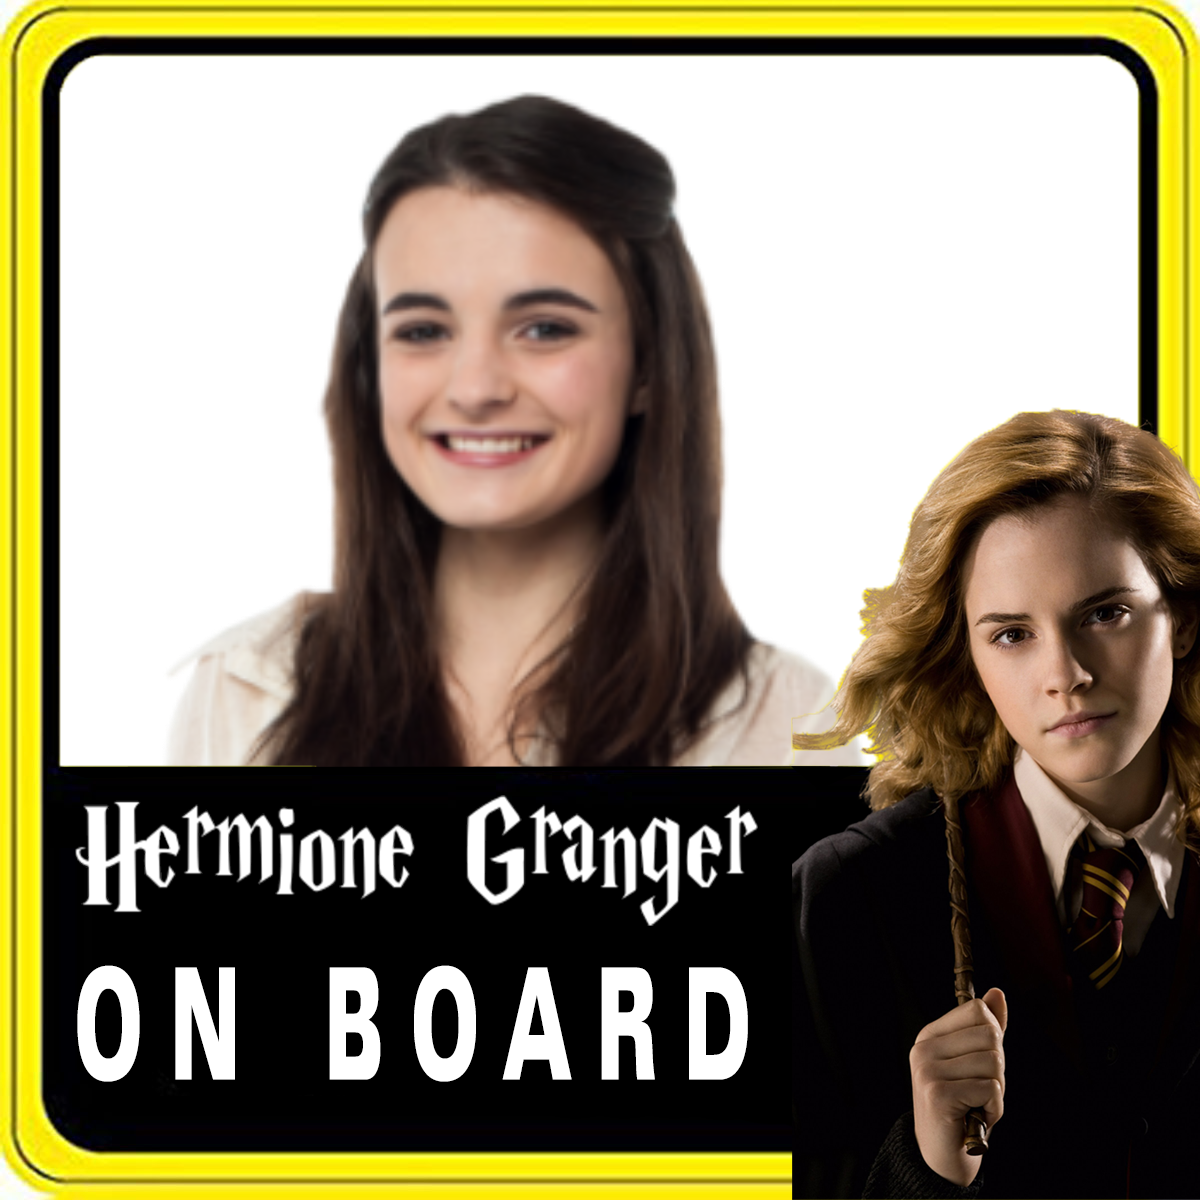 Personalised  Hermione Granger On Board Safety Sticker Car Vinyl Stickers Decals Accessories